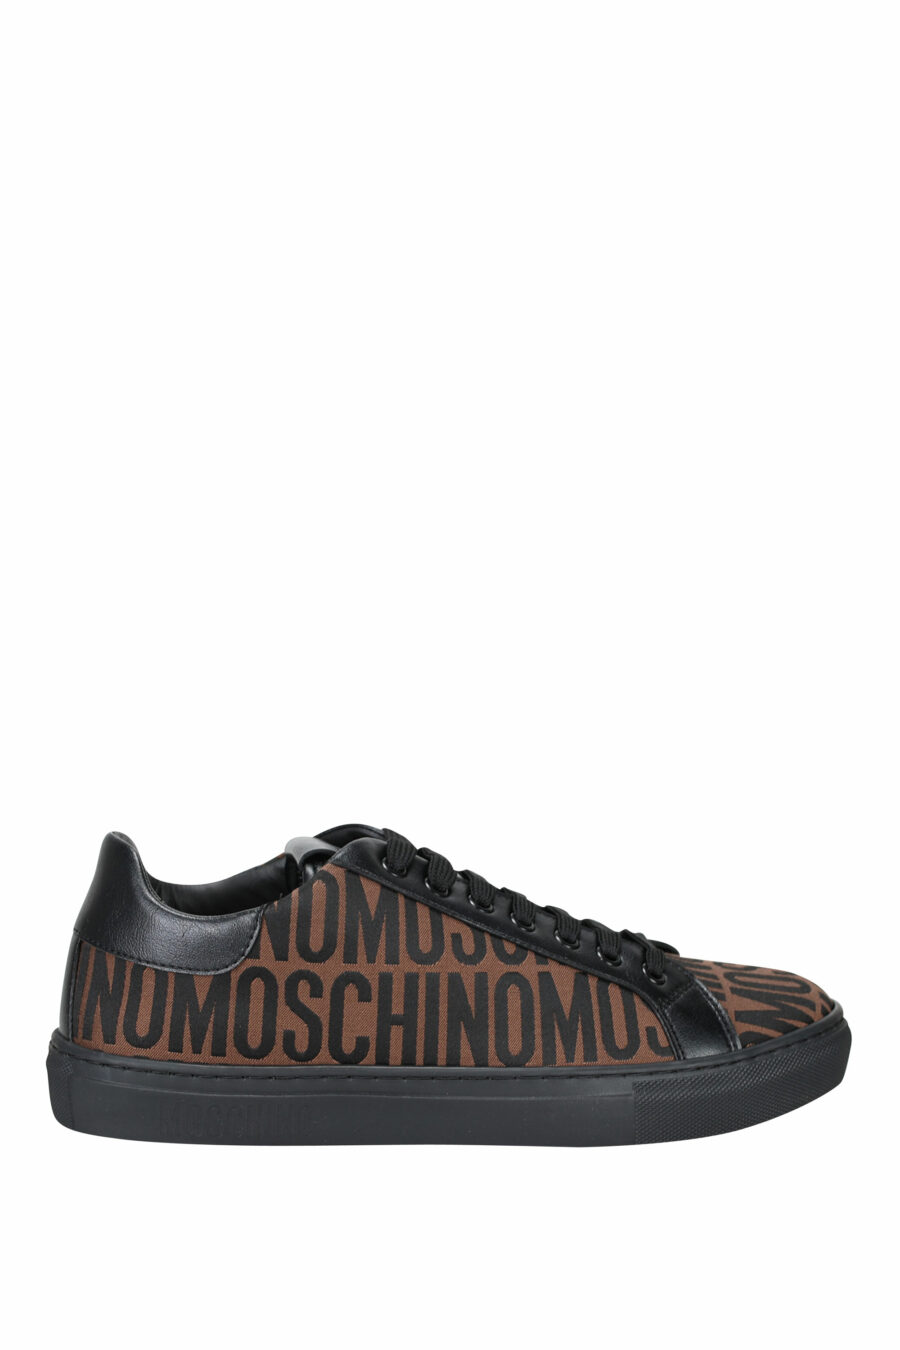 Zapatillas marrón "all over logo" con suela negra - 8054653827523